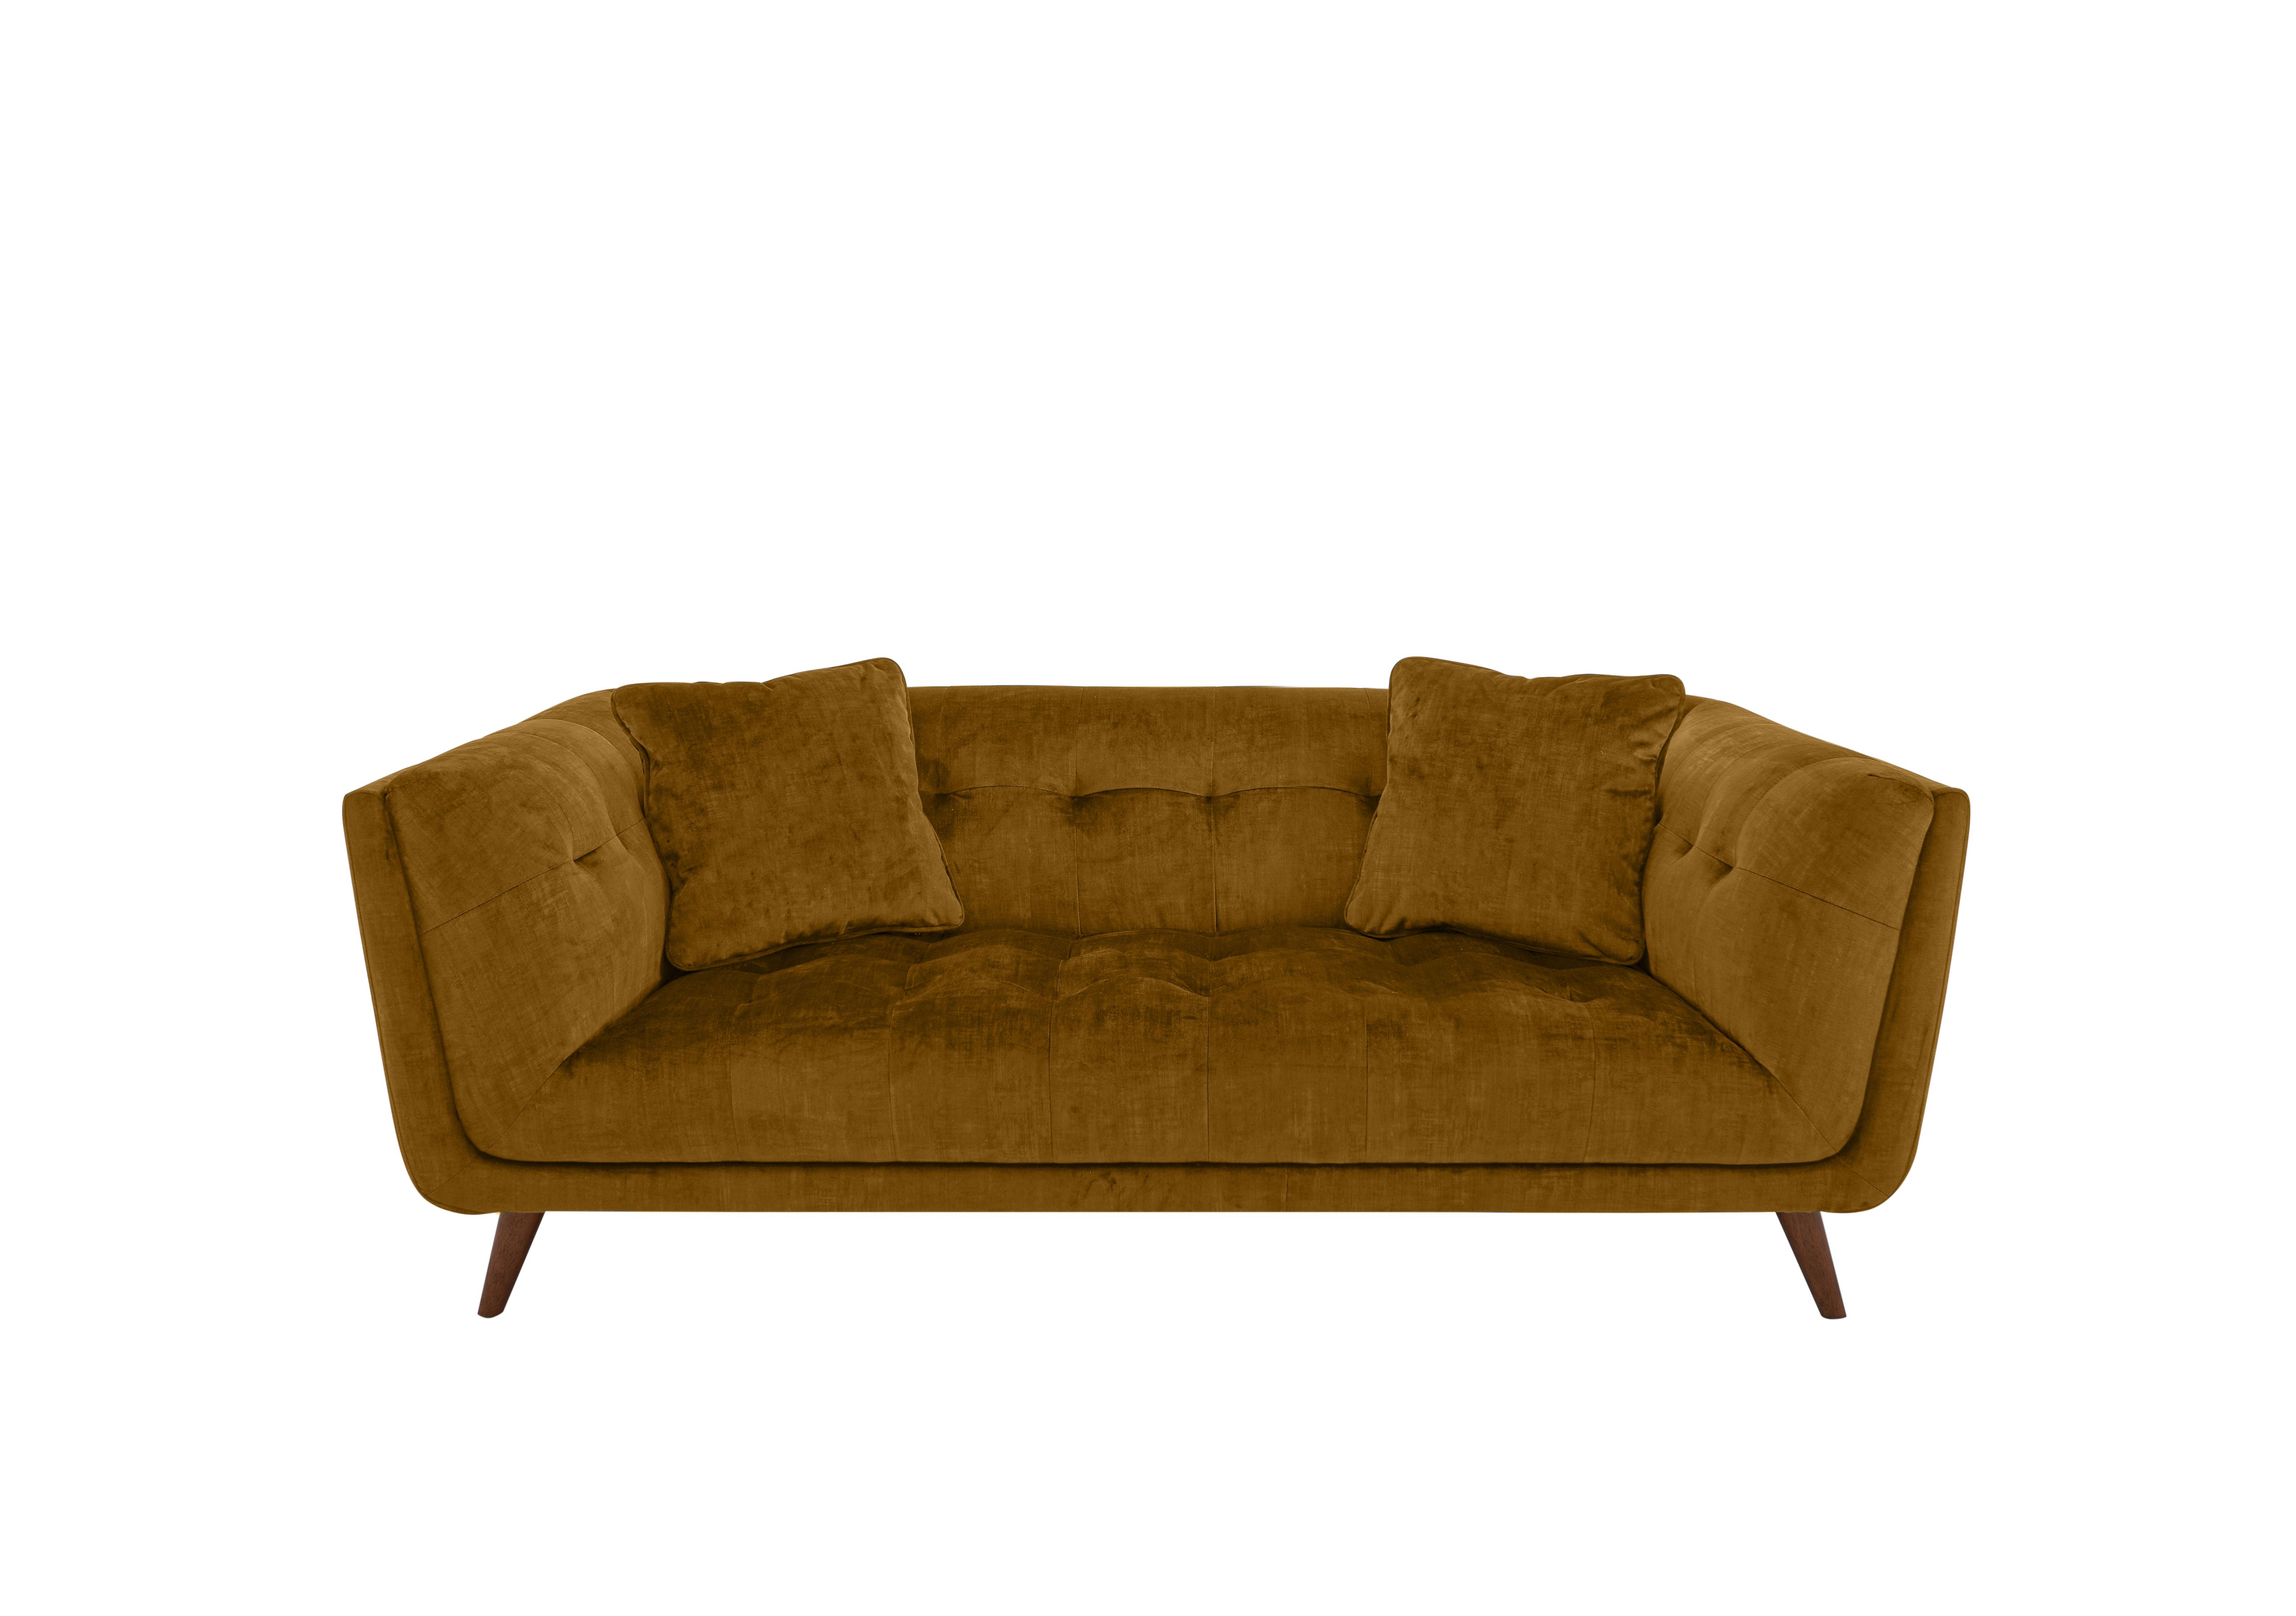 Rene Large 2 Seater Fabric Sofa in 52002 Heritage Saffron Wa Ft on Furniture Village